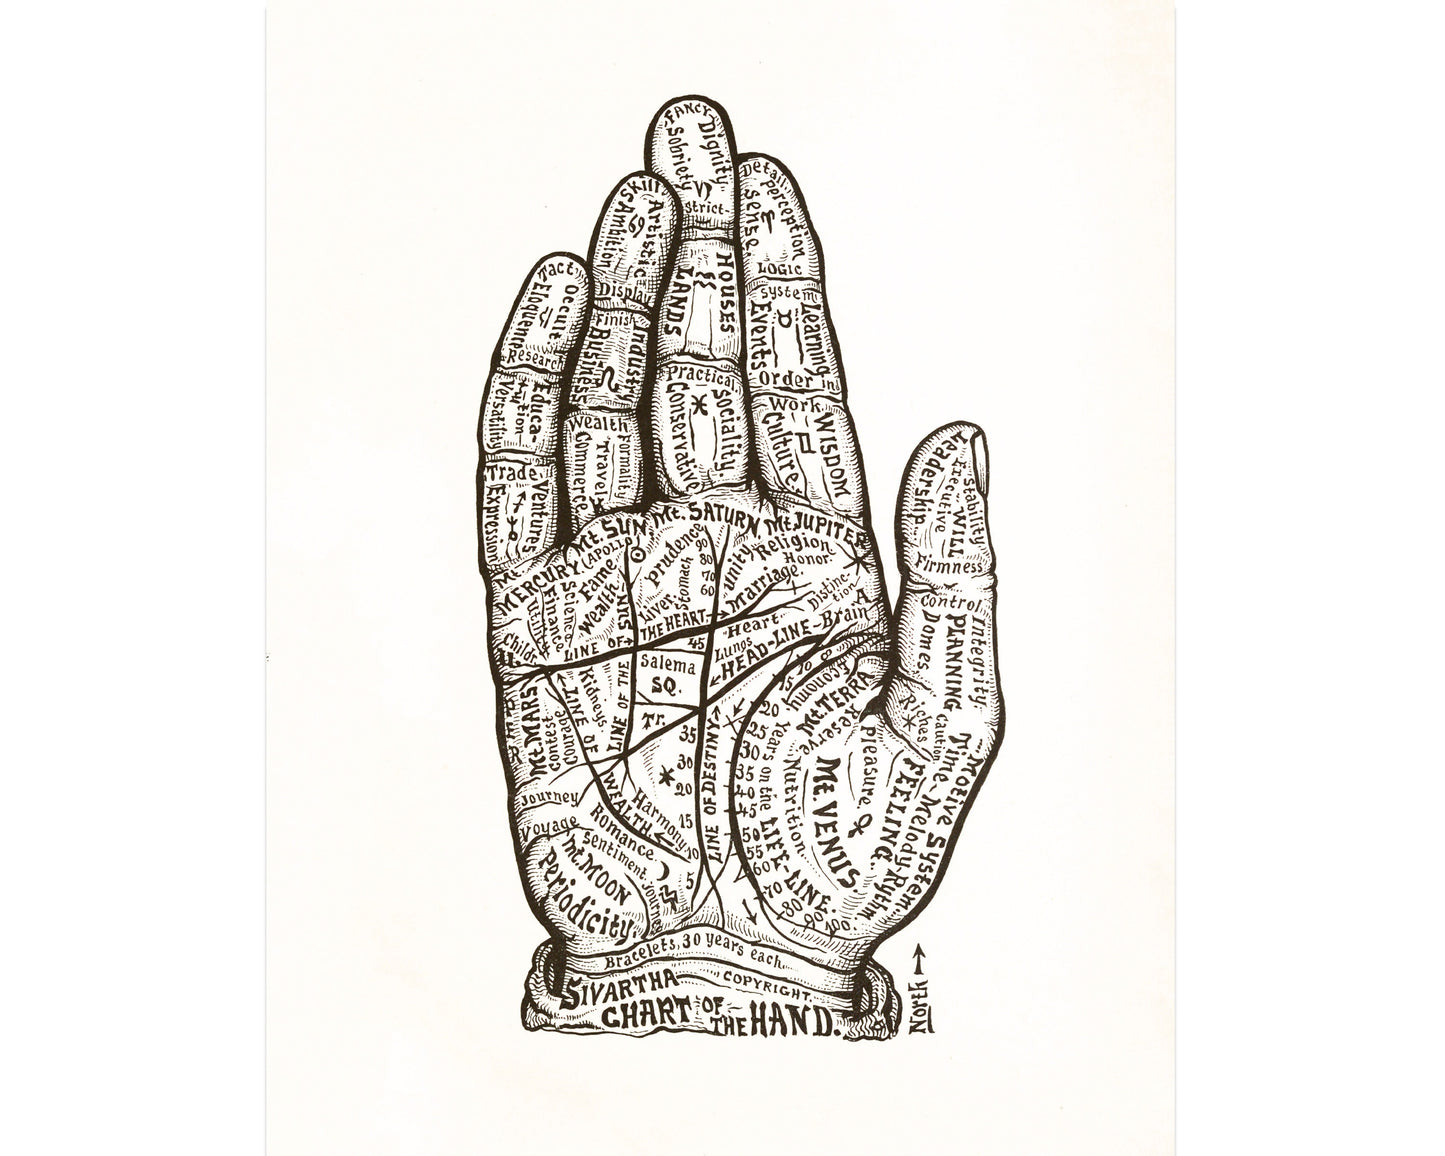 Vintage Astrologoy hand chart | Astro-phrenology art | Retro human hand illustration | Modern Vintage Décor | Eco-friendly gift